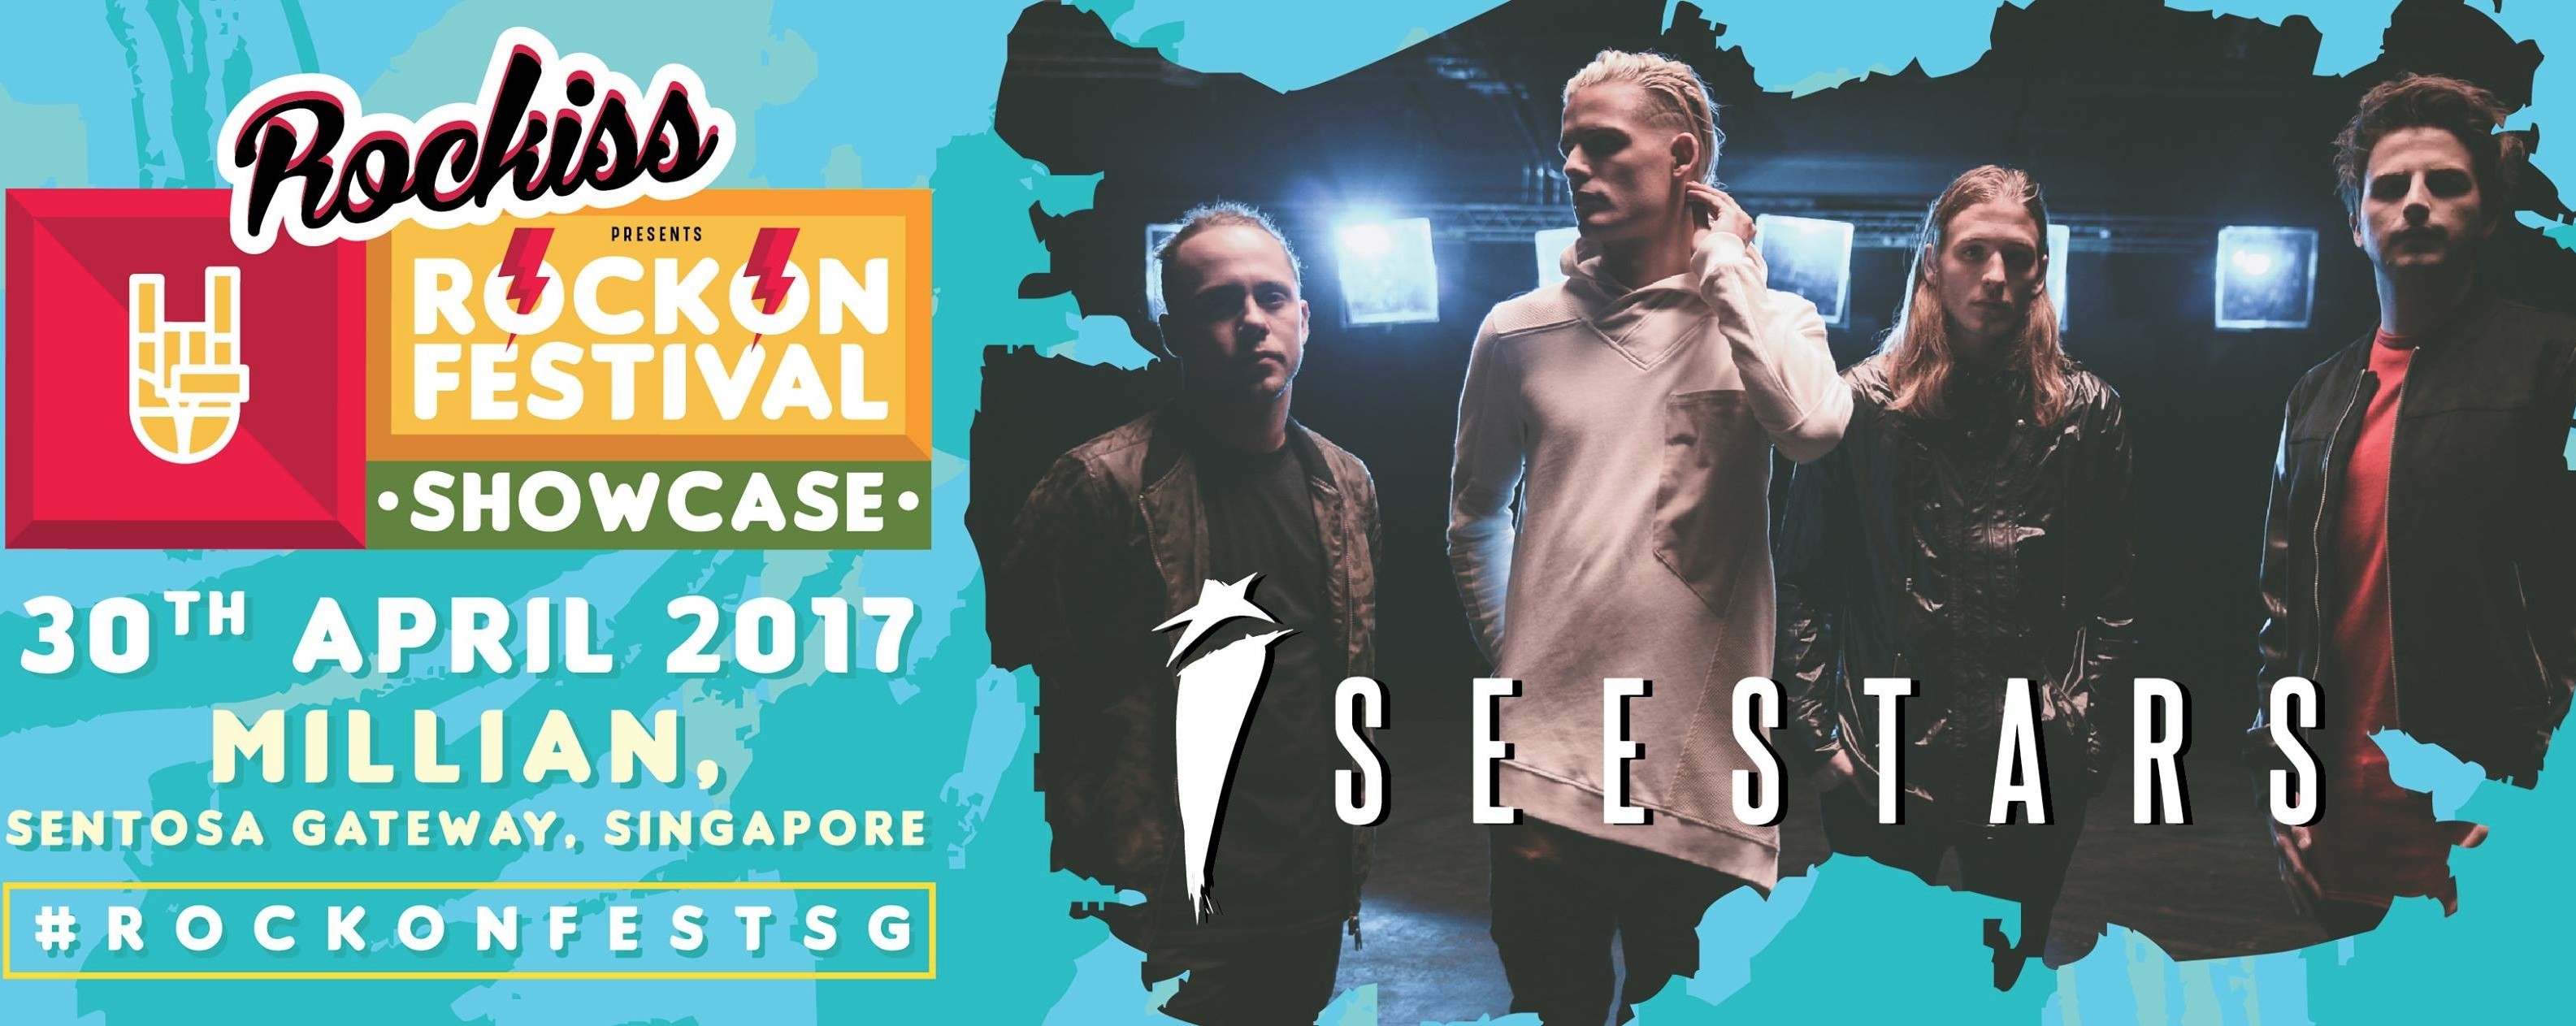 Rockiss Rockton Festival Showcase: I See Stars live in Singapore